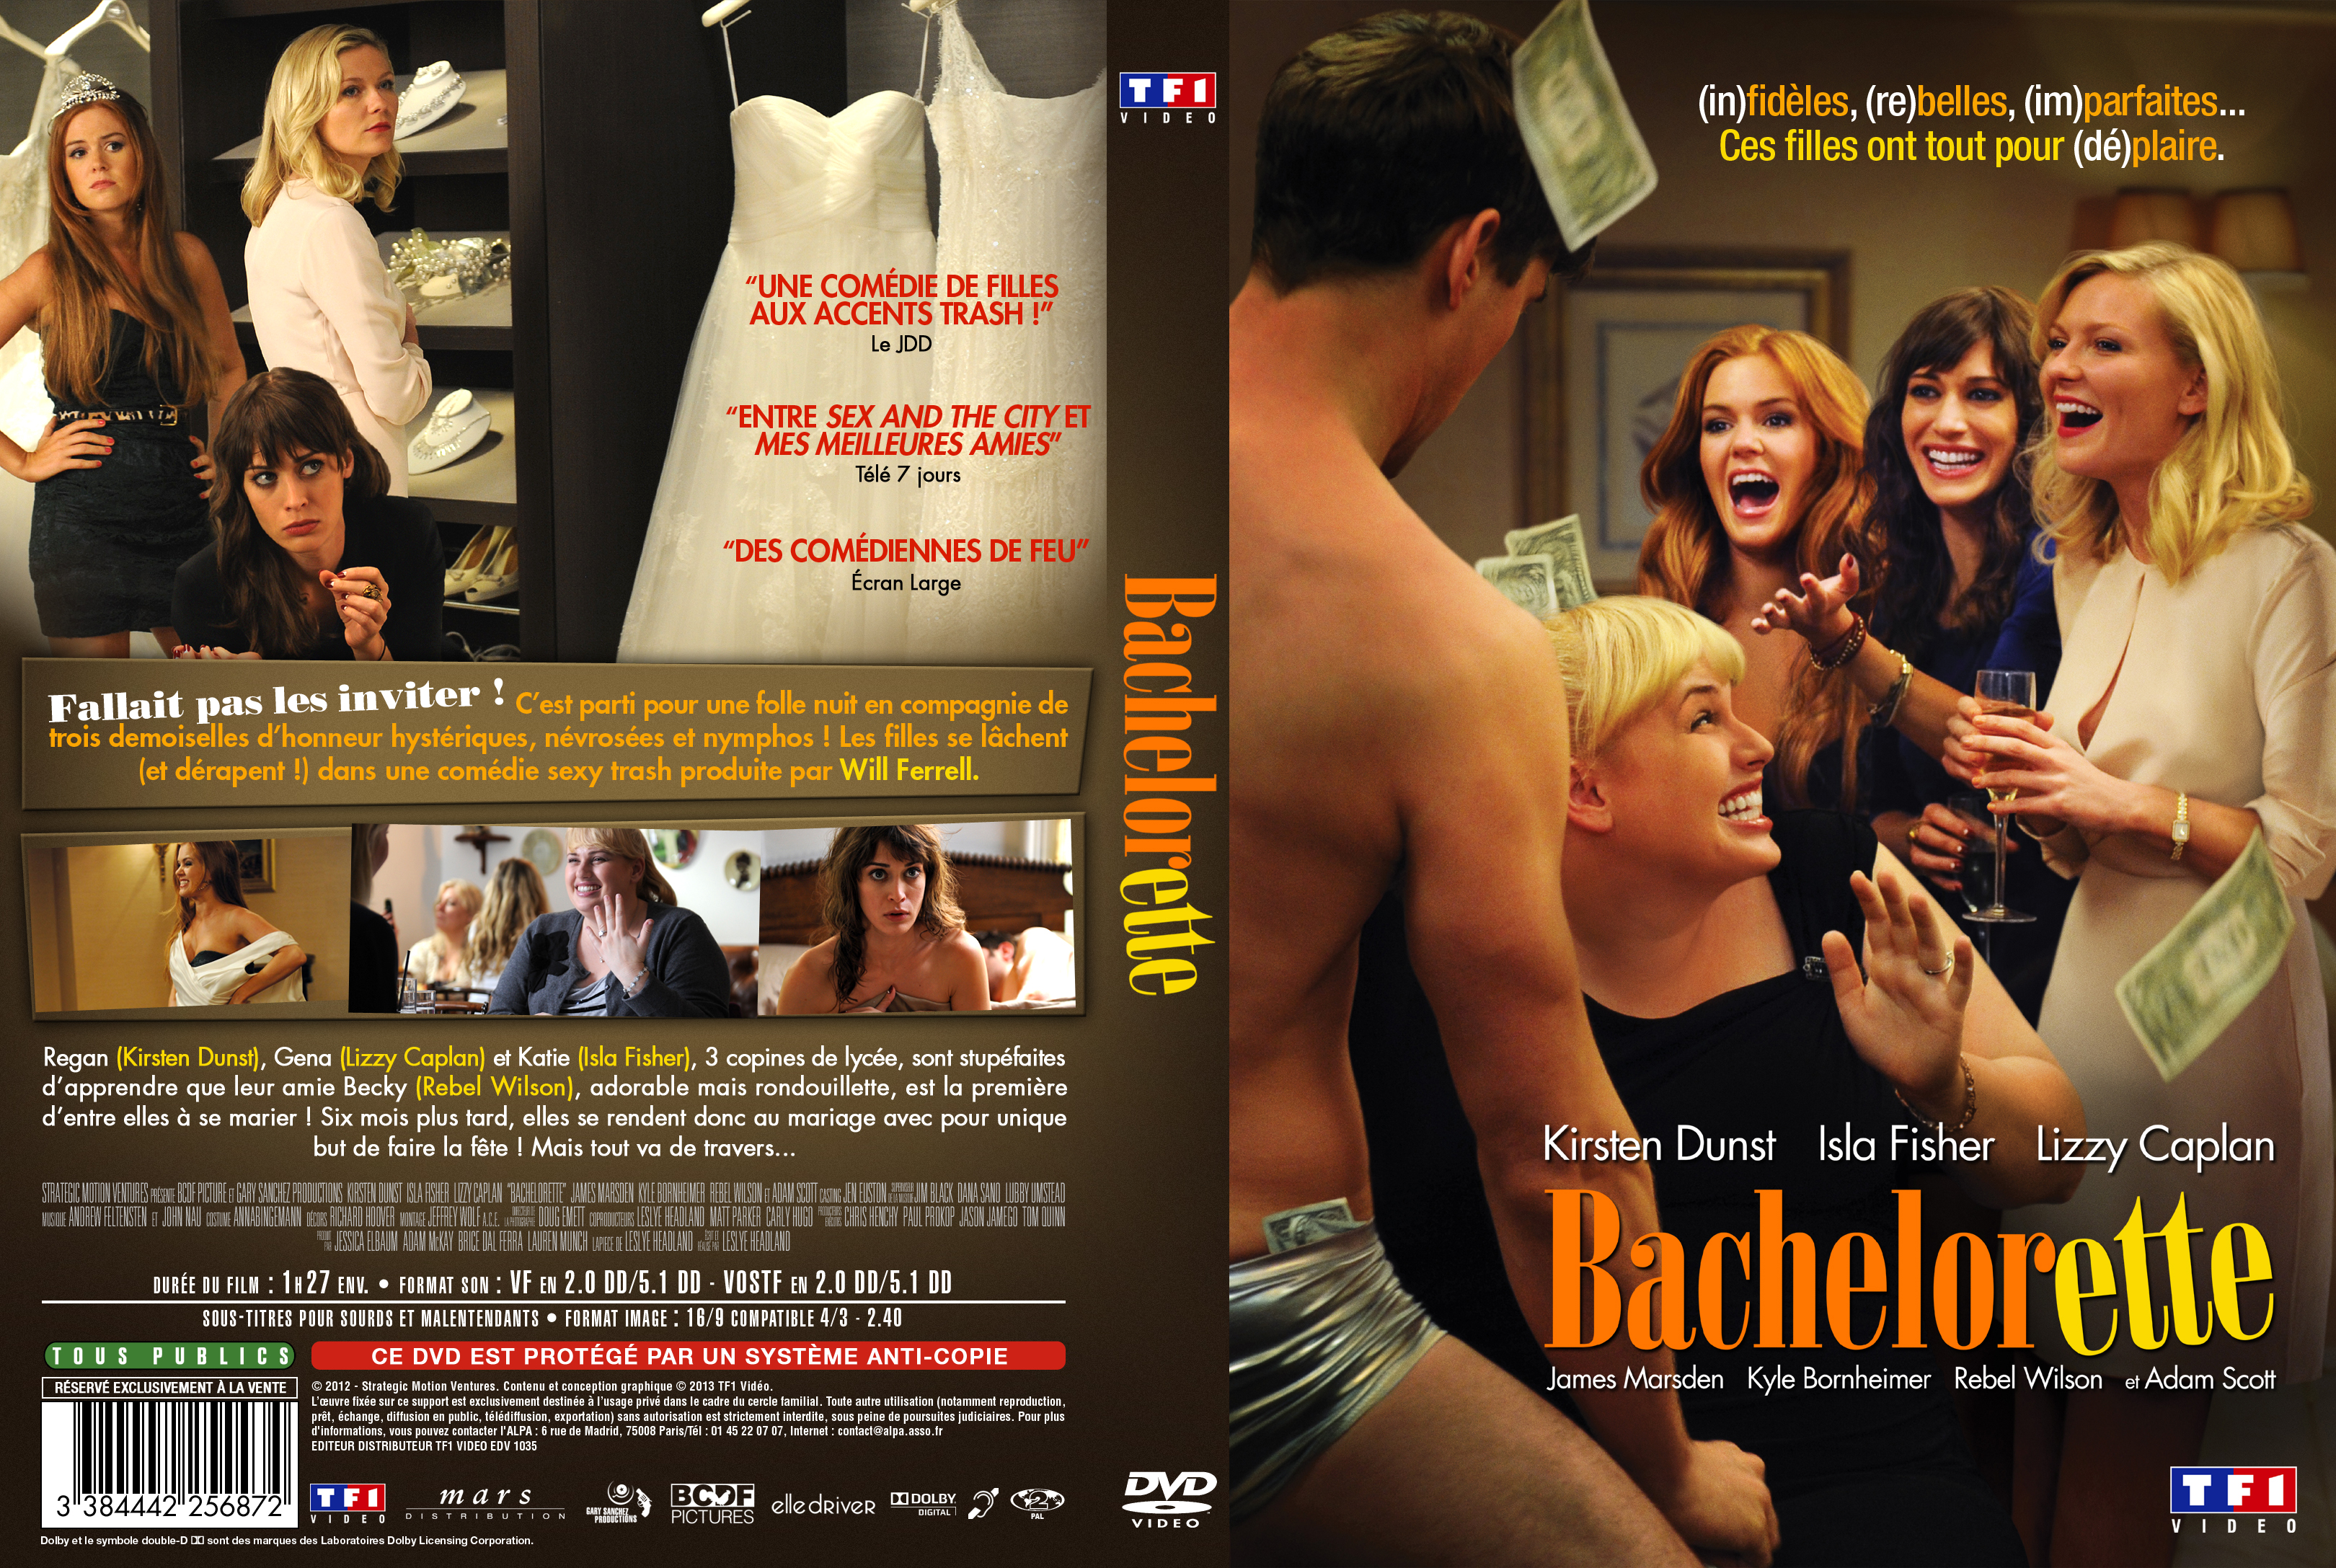 Jaquette DVD Bachelorette custom